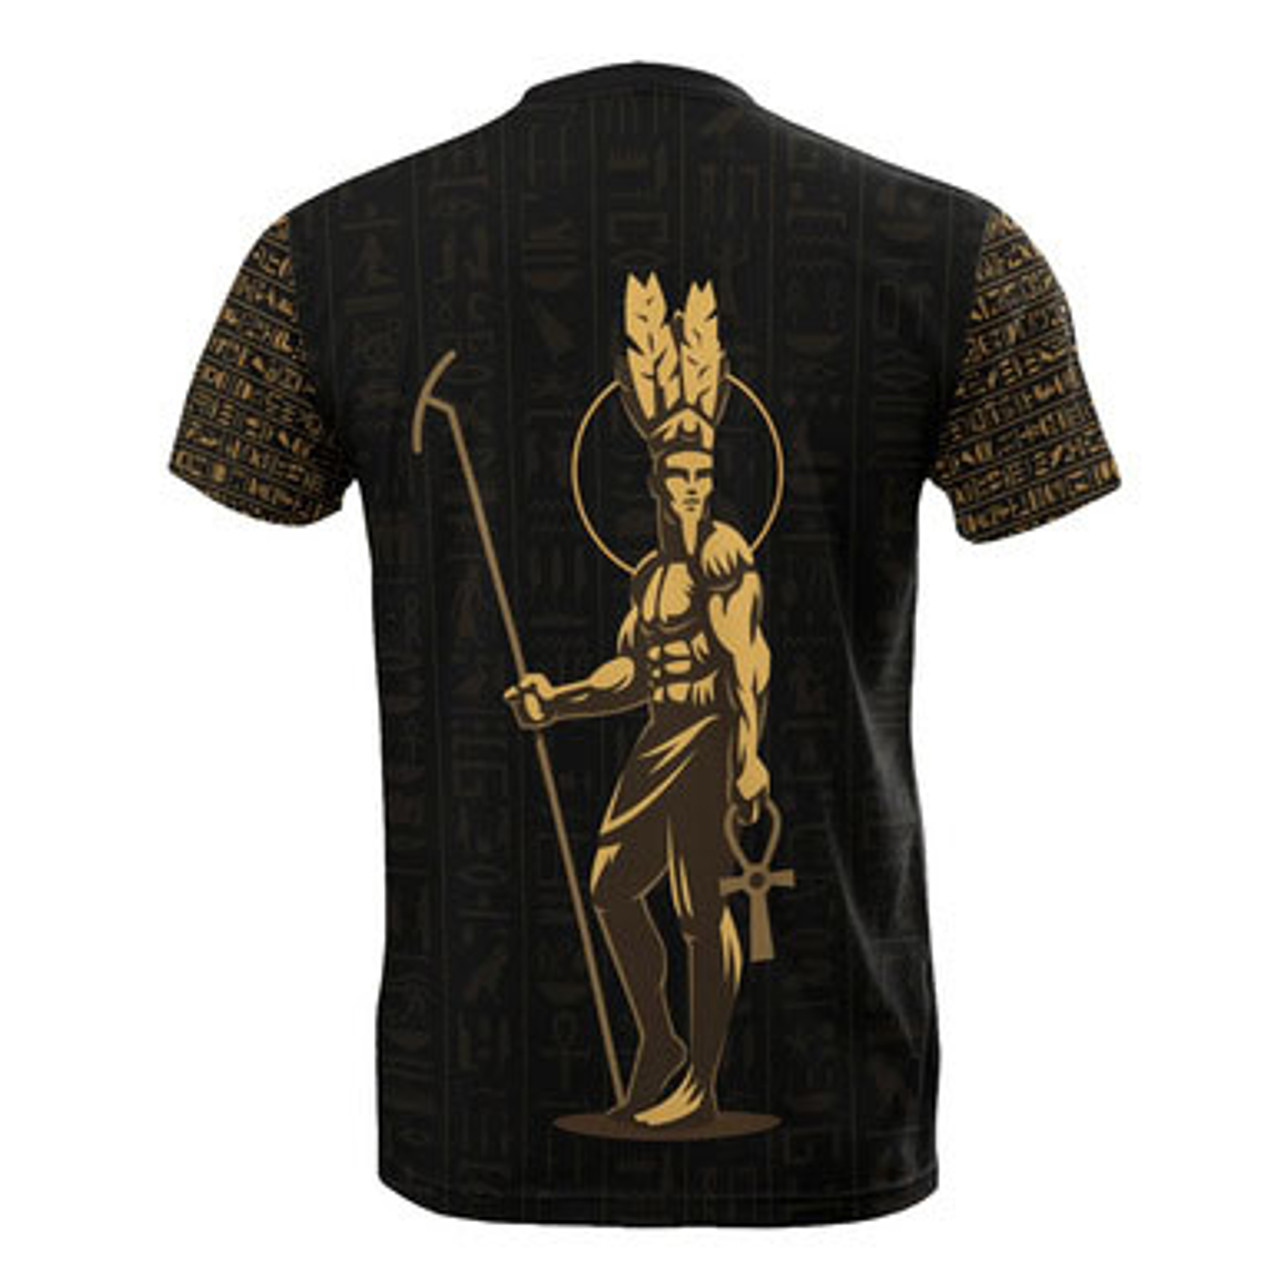 Egyptian T-Shirt - Africa Egyptian God Amun T-Shirt Desert Fashion 2